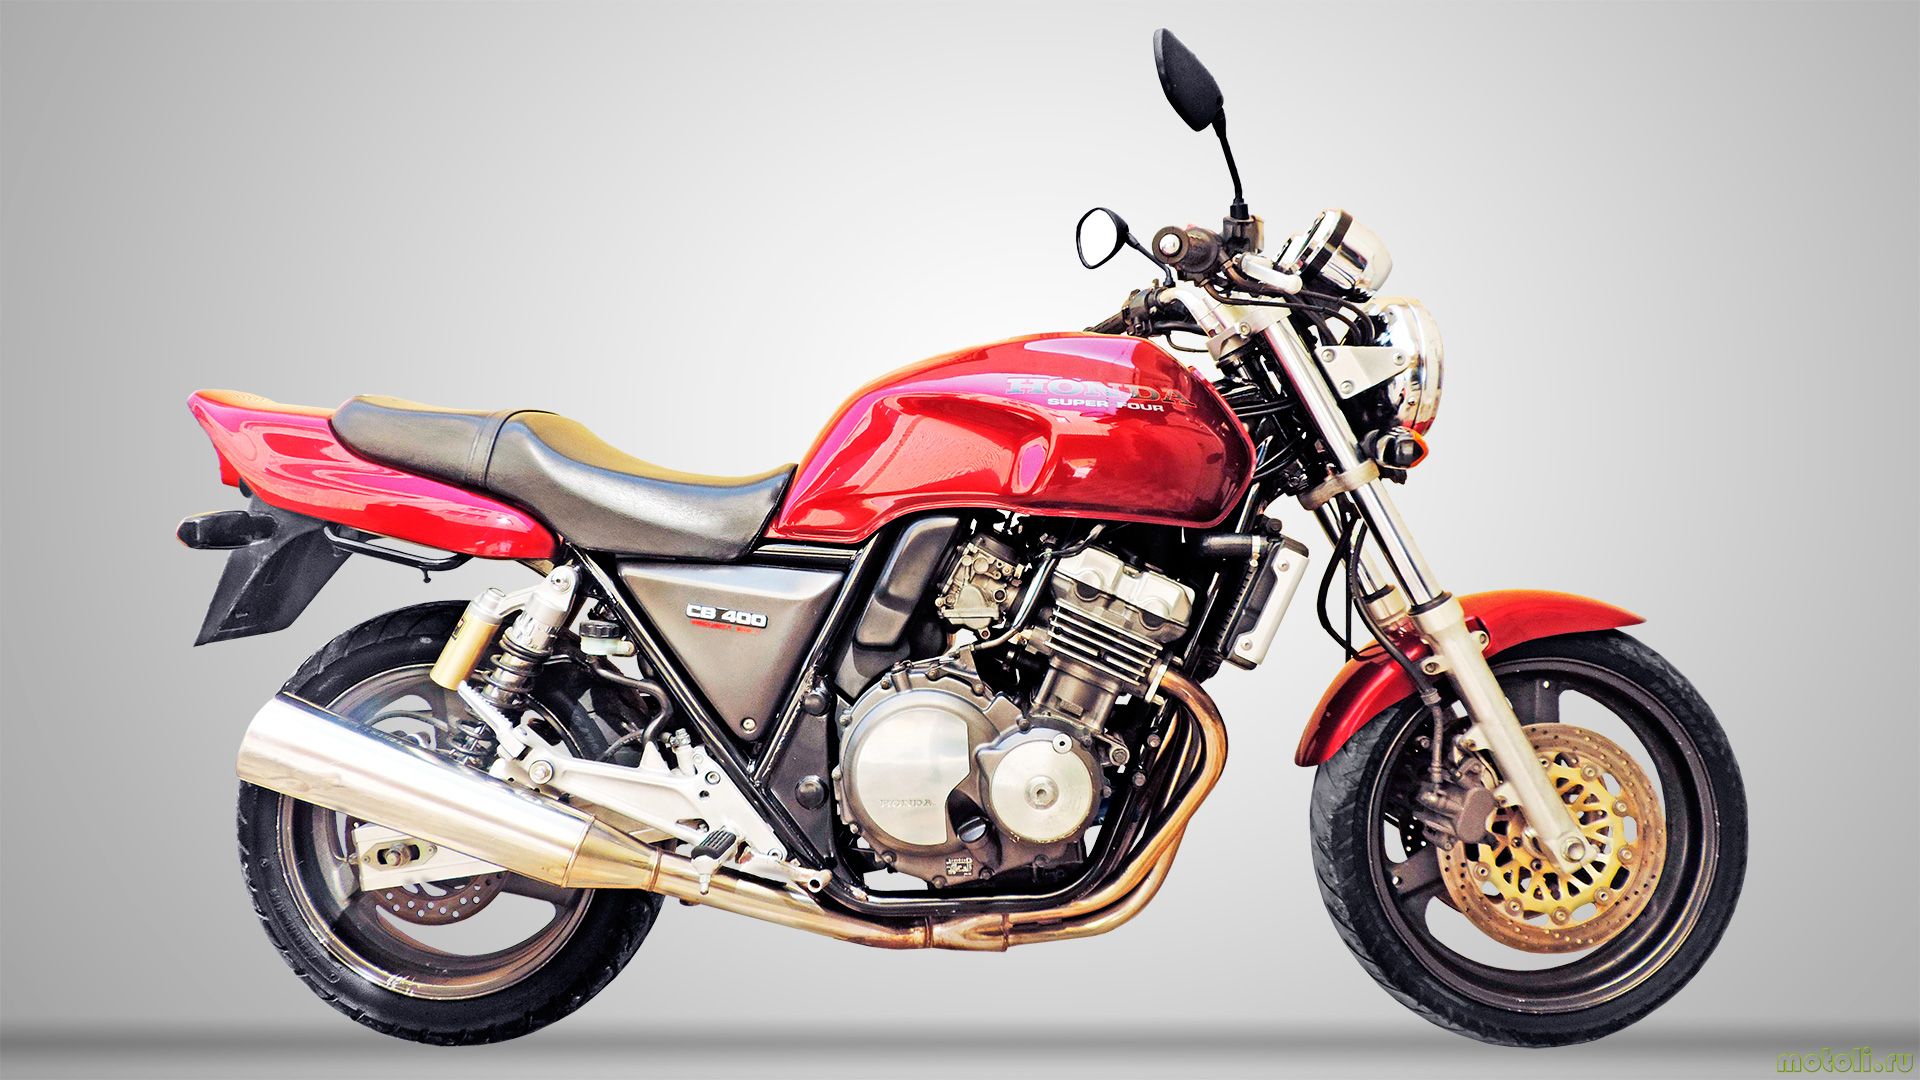 Honda cb 400 (super four): review, history, specs - bikeswiki.com, japanese motorcycle encyclopedia